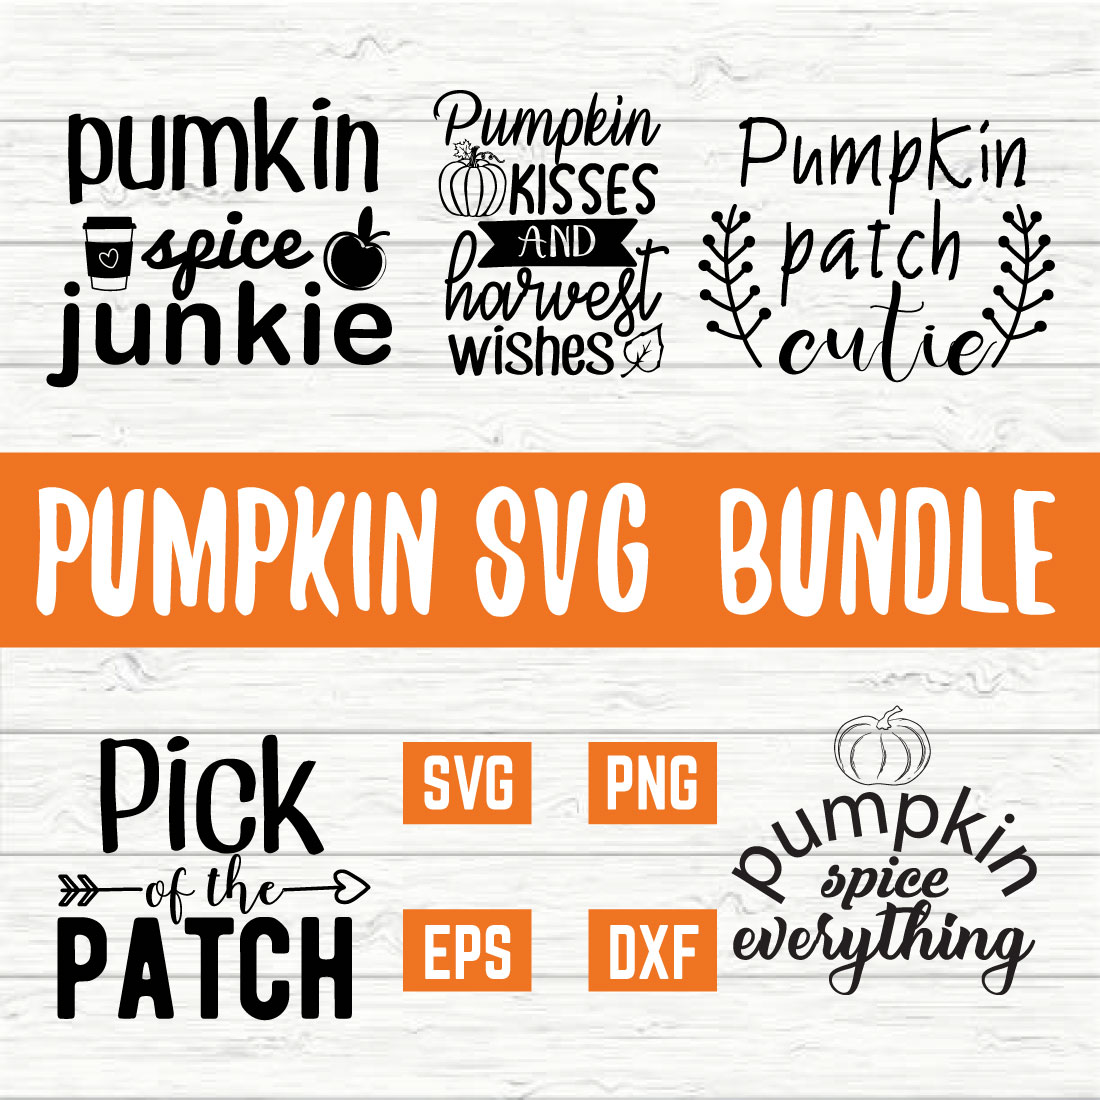 Pumpkin Design Bundle vol 4 preview image.